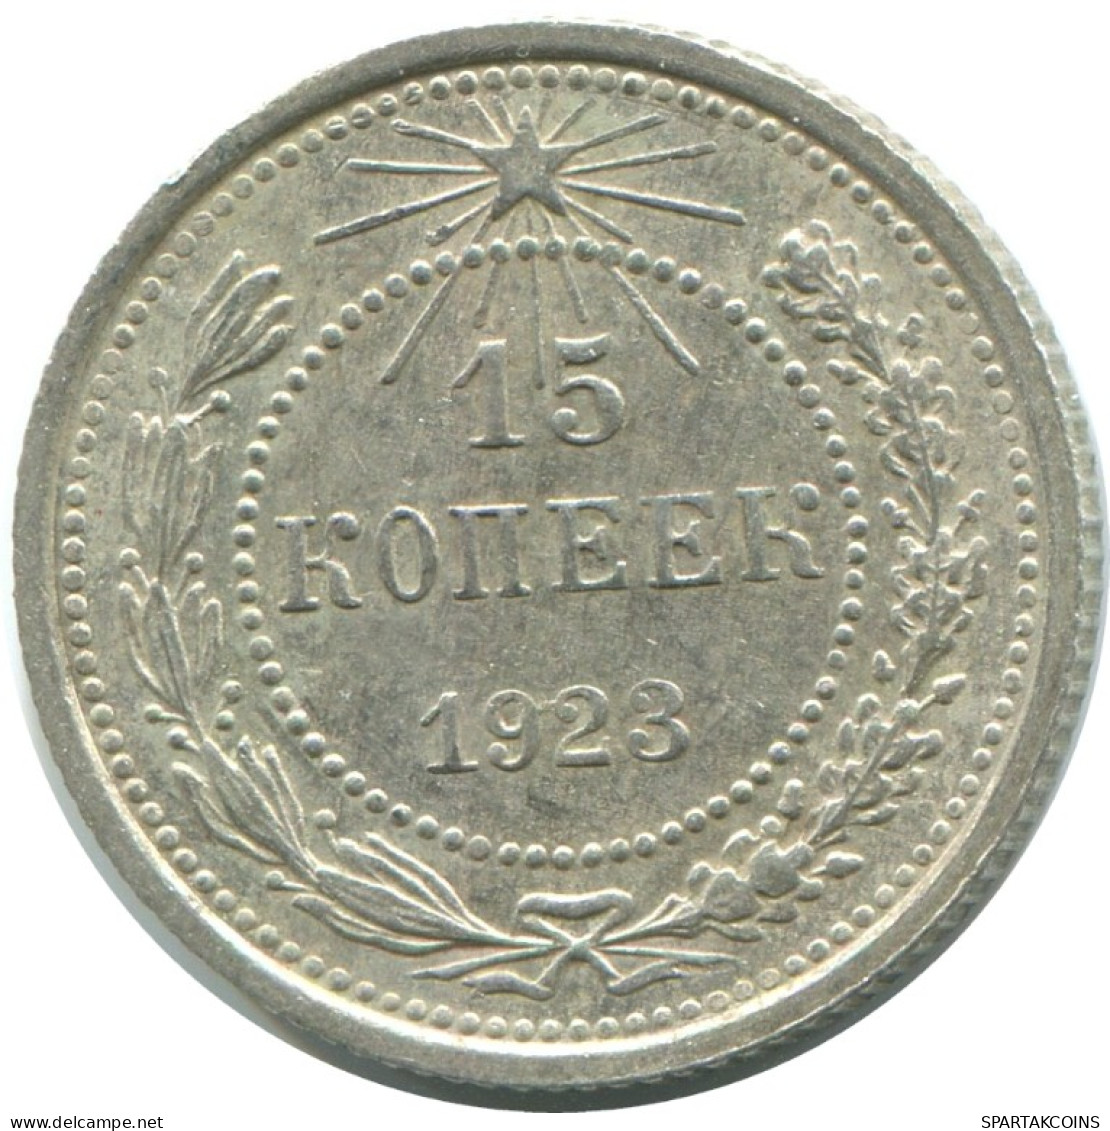 15 KOPEKS 1923 RUSSIA RSFSR SILVER Coin HIGH GRADE #AF032.4.U.A - Russie